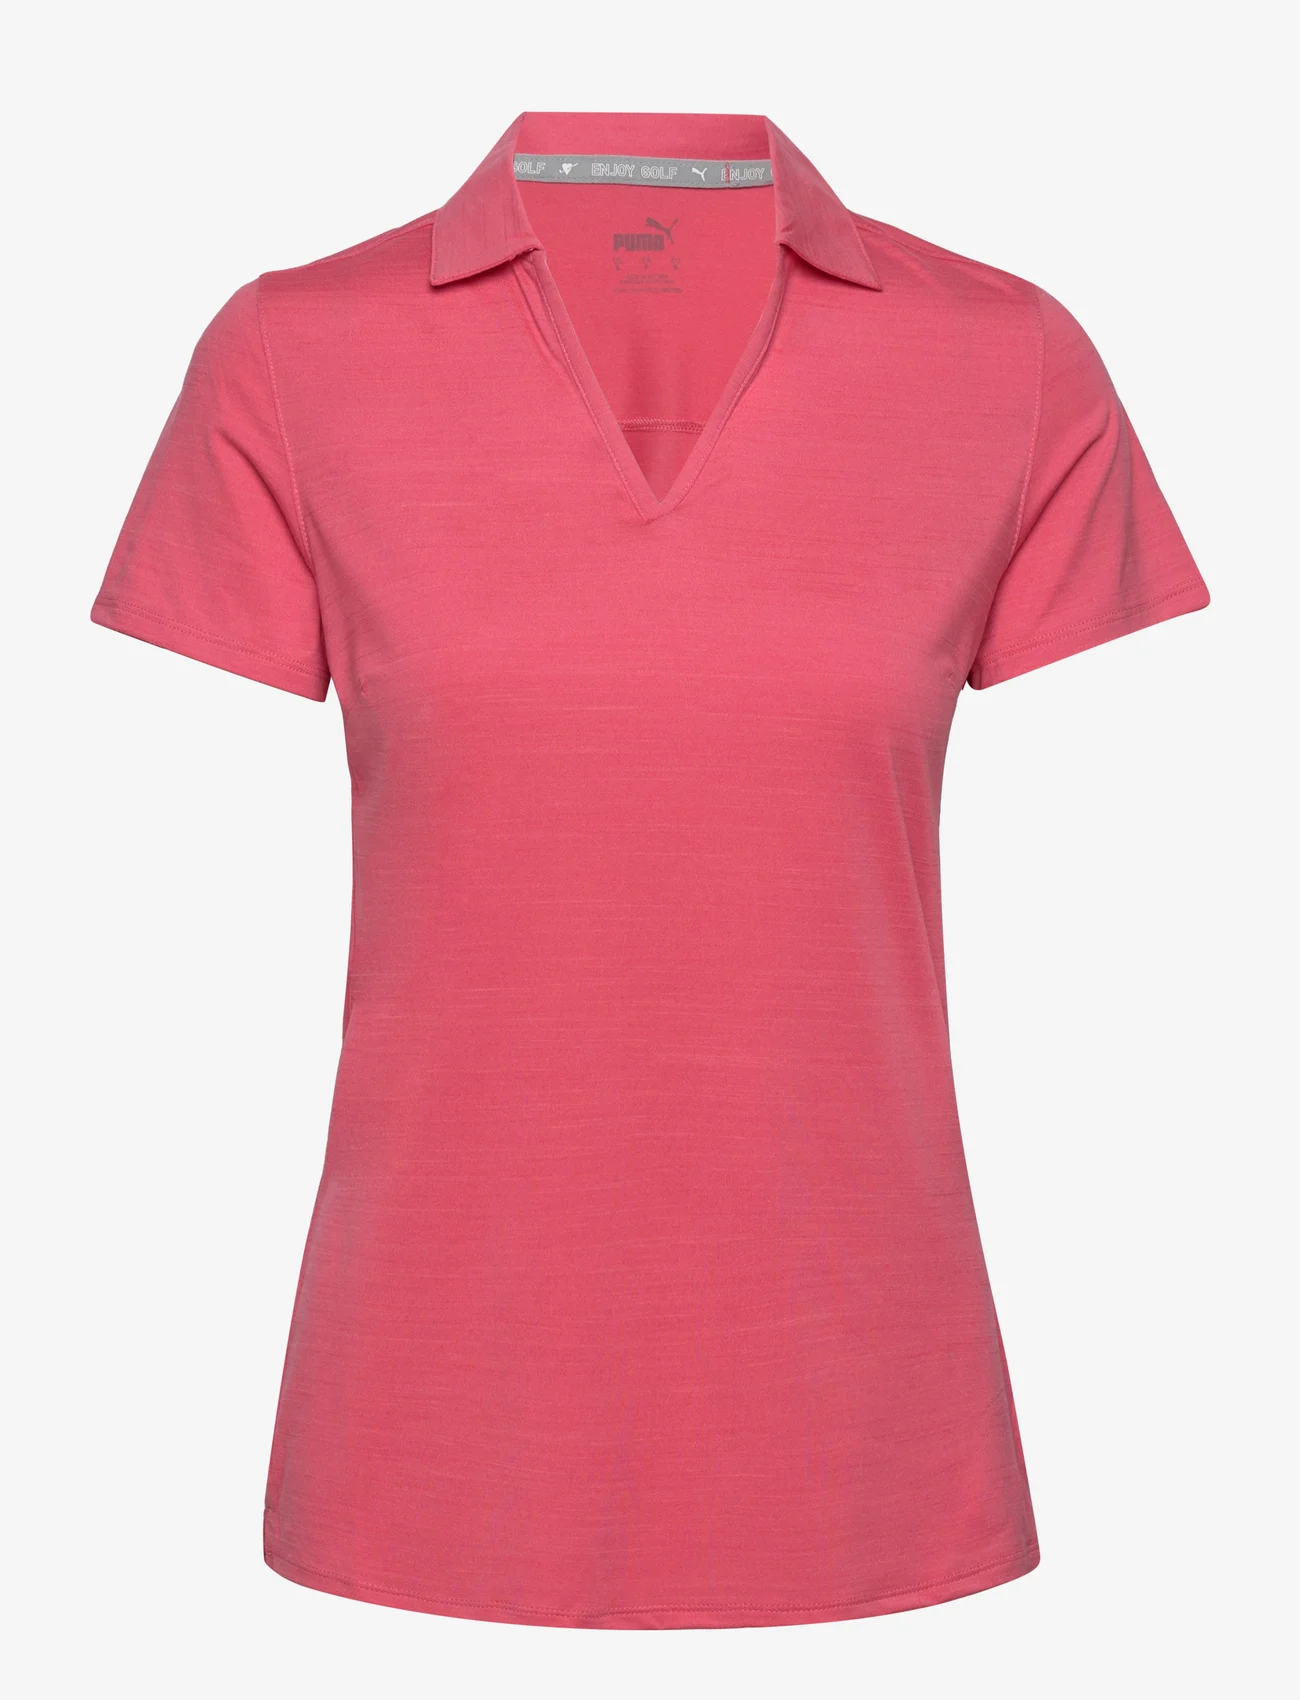 PUMA Golf - W Cloudspun Coast Polo - t-shirt & tops - loveable heather - 0